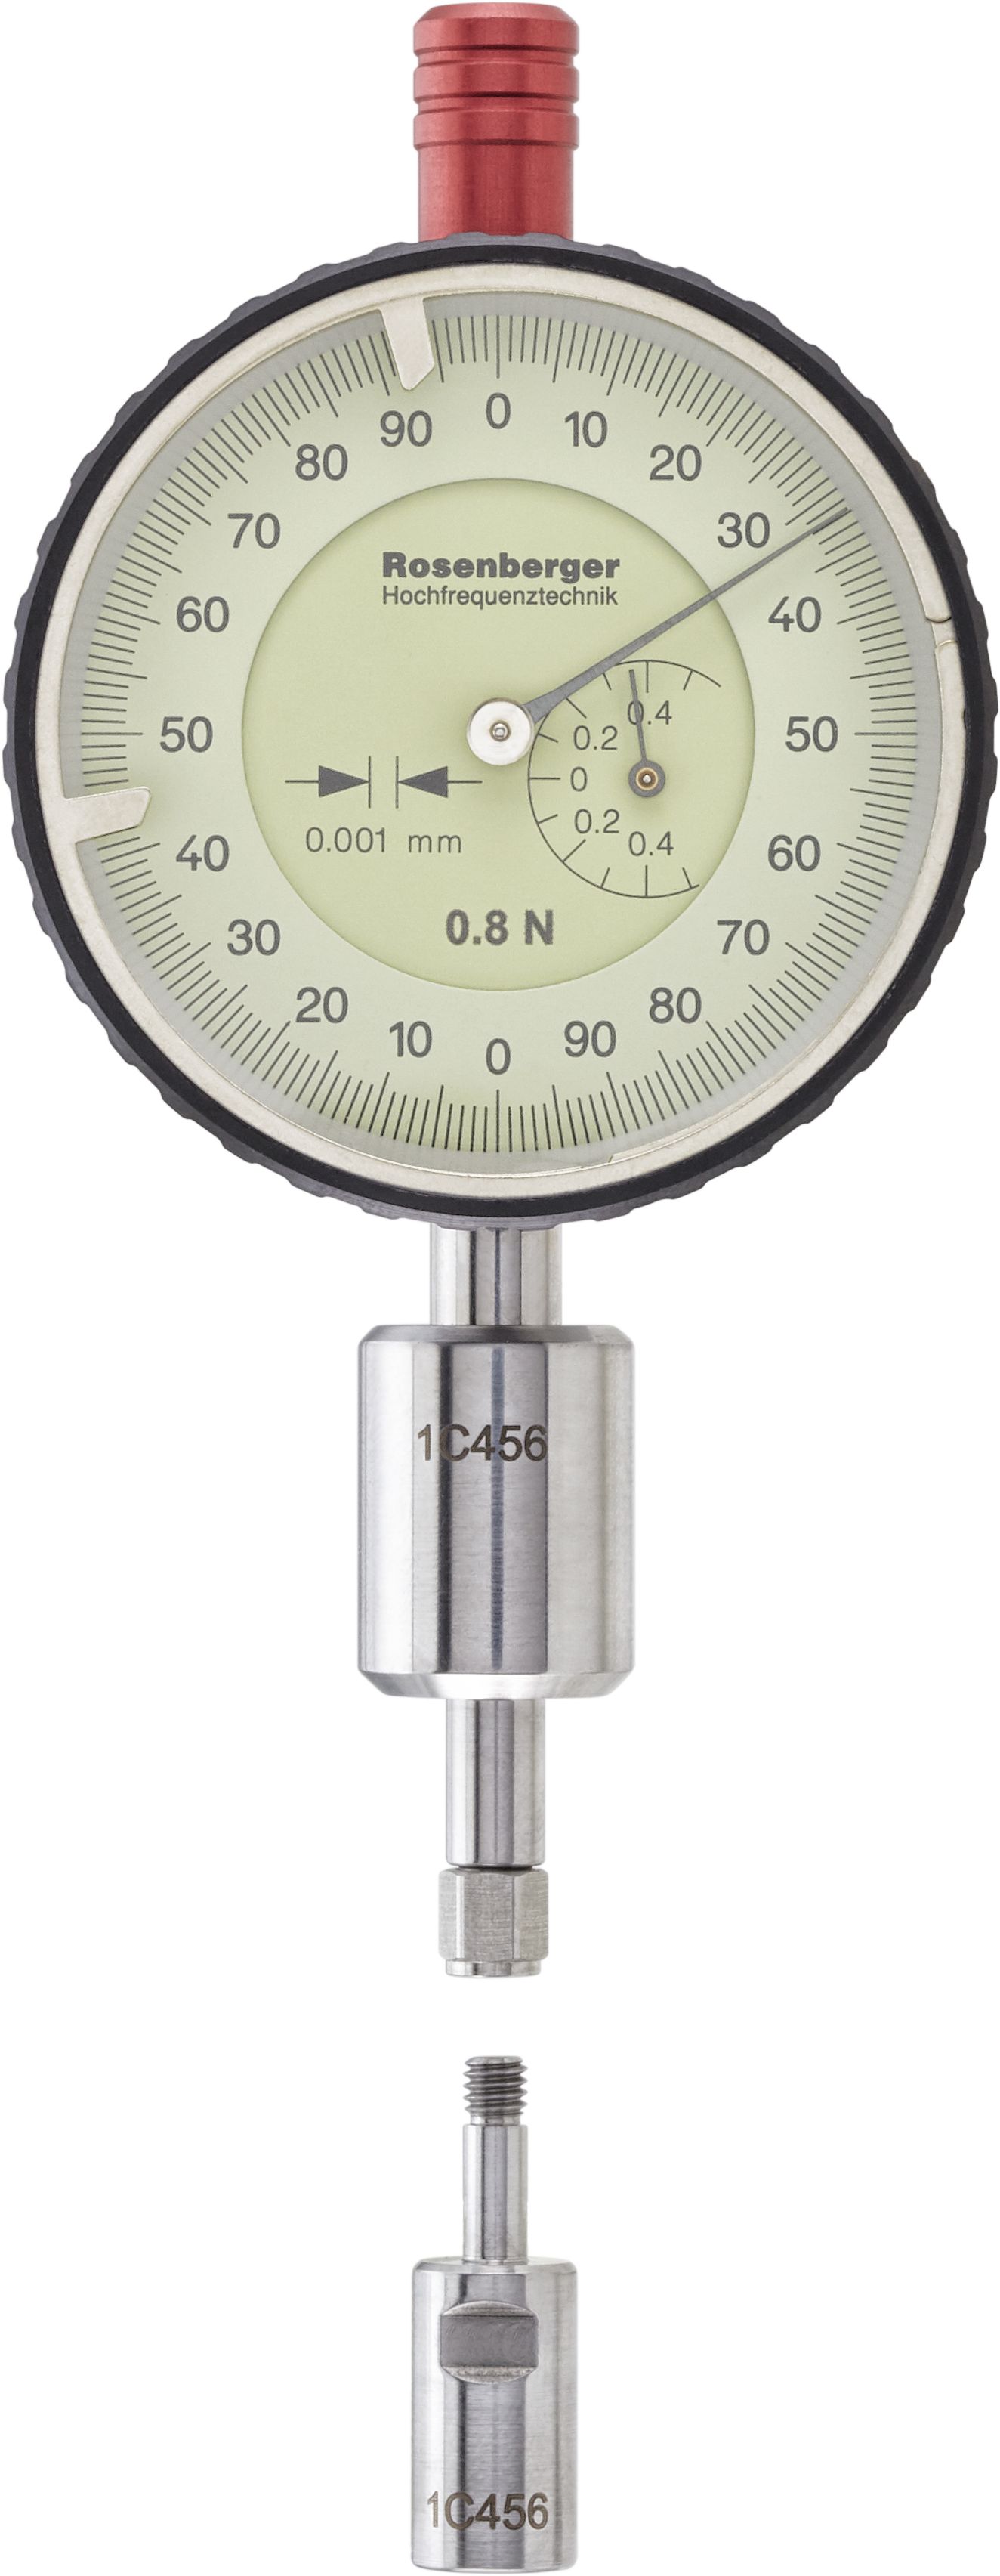 01W00K-000 gauge | Metrology & Measurement Equipment | Radio Frequency ...